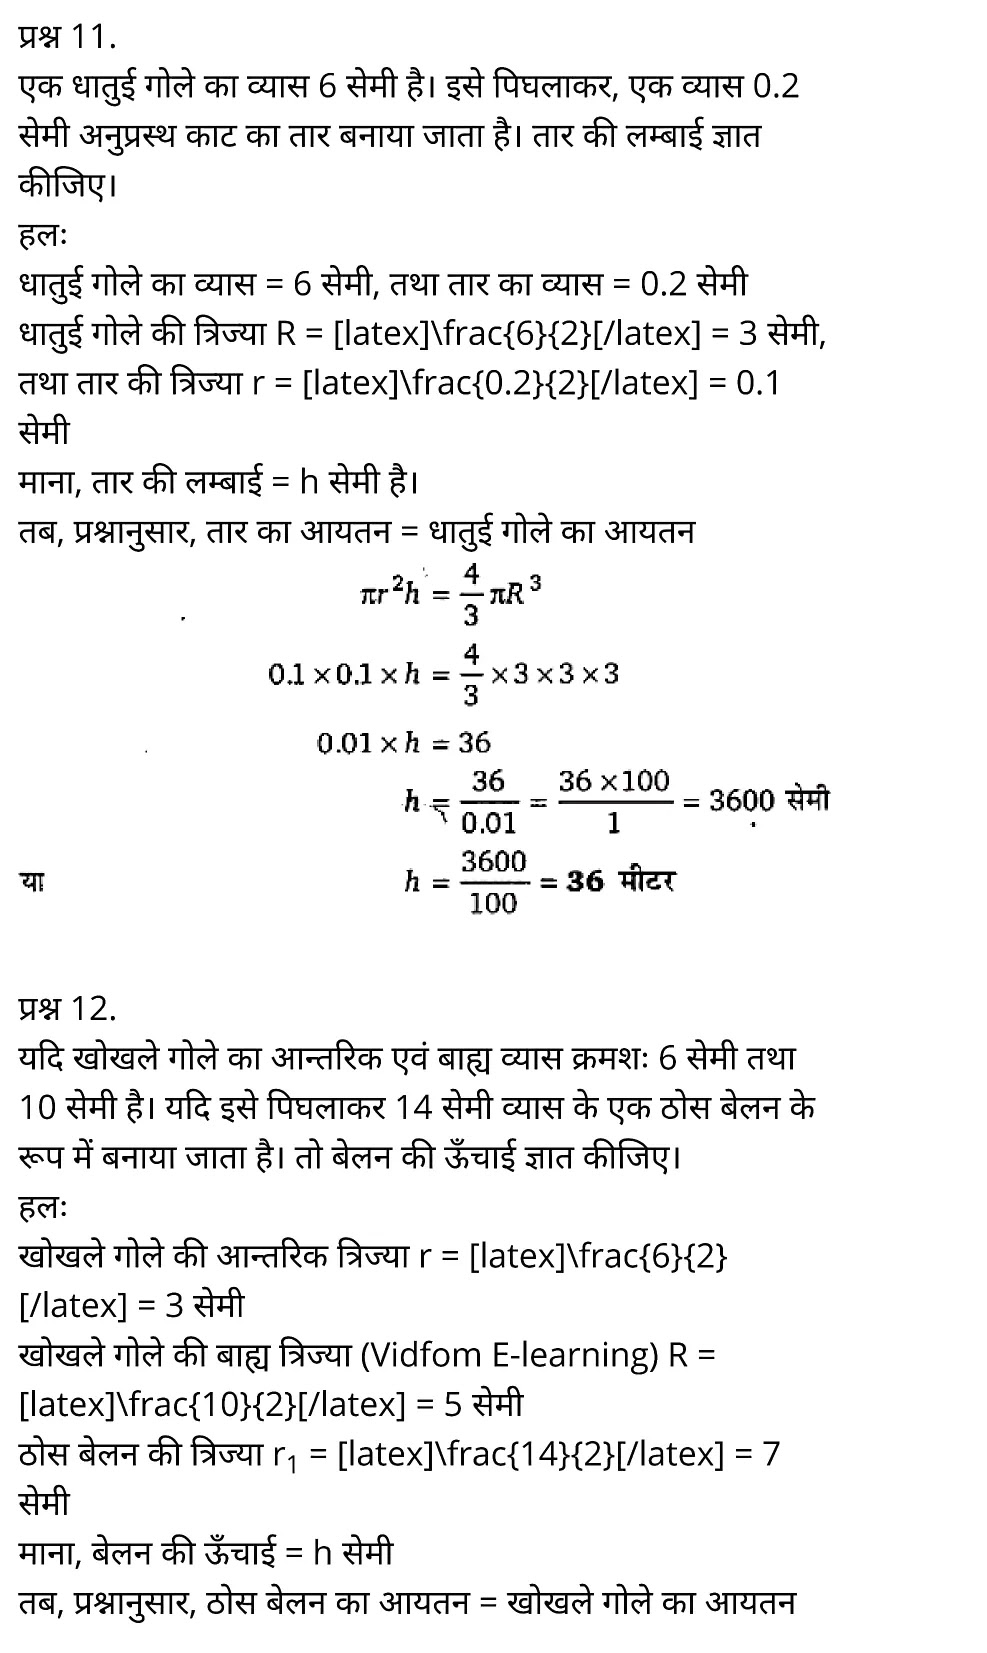 Chapter 13 Surface Area and Volumes Ex 13.1, Chapter 13 Surface Area and Volumes Ex 13.2, Chapter 13 Surface Area and Volumes Ex 13.3, कक्षा 10 बालाजी गणित  के नोट्स  हिंदी में एनसीईआरटी समाधान,     class 10 Balaji Maths Chapter 13,   class 10 Balaji Maths Chapter 13 ncert solutions in Hindi,   class 10 Balaji Maths Chapter 13 notes in hindi,   class 10 Balaji Maths Chapter 13 question answer,   class 10 Balaji Maths Chapter 13 notes,   class 10 Balaji Maths Chapter 13 class 10 Balaji Maths Chapter 13 in  hindi,    class 10 Balaji Maths Chapter 13 important questions in  hindi,   class 10 Balaji Maths Chapter 13 notes in hindi,    class 10 Balaji Maths Chapter 13 test,   class 10 Balaji Maths Chapter 13 pdf,   class 10 Balaji Maths Chapter 13 notes pdf,   class 10 Balaji Maths Chapter 13 exercise solutions,   class 10 Balaji Maths Chapter 13 notes study rankers,   class 10 Balaji Maths Chapter 13 notes,    class 10 Balaji Maths Chapter 13  class 10  notes pdf,   class 10 Balaji Maths Chapter 13 class 10  notes  ncert,   class 10 Balaji Maths Chapter 13 class 10 pdf,   class 10 Balaji Maths Chapter 13  book,   class 10 Balaji Maths Chapter 13 quiz class 10  ,    10  th class 10 Balaji Maths Chapter 13  book up board,   up board 10  th class 10 Balaji Maths Chapter 13 notes,  class 10 Balaji Maths,   class 10 Balaji Maths ncert solutions in Hindi,   class 10 Balaji Maths notes in hindi,   class 10 Balaji Maths question answer,   class 10 Balaji Maths notes,  class 10 Balaji Maths class 10 Balaji Maths Chapter 13 in  hindi,    class 10 Balaji Maths important questions in  hindi,   class 10 Balaji Maths notes in hindi,    class 10 Balaji Maths test,  class 10 Balaji Maths class 10 Balaji Maths Chapter 13 pdf,   class 10 Balaji Maths notes pdf,   class 10 Balaji Maths exercise solutions,   class 10 Balaji Maths,  class 10 Balaji Maths notes study rankers,   class 10 Balaji Maths notes,  class 10 Balaji Maths notes,   class 10 Balaji Maths  class 10  notes pdf,   class 10 Balaji Maths class 10  notes  ncert,   class 10 Balaji Maths class 10 pdf,   class 10 Balaji Maths  book,  class 10 Balaji Maths quiz class 10  ,  10  th class 10 Balaji Maths    book up board,    up board 10  th class 10 Balaji Maths notes,      कक्षा 10 बालाजी गणित अध्याय 13 ,  कक्षा 10 बालाजी गणित, कक्षा 10 बालाजी गणित अध्याय 13  के नोट्स हिंदी में,  कक्षा 10 का हिंदी अध्याय 13 का प्रश्न उत्तर,  कक्षा 10 बालाजी गणित अध्याय 13  के नोट्स,  10 कक्षा बालाजी गणित  हिंदी में, कक्षा 10 बालाजी गणित अध्याय 13  हिंदी में,  कक्षा 10 बालाजी गणित अध्याय 13  महत्वपूर्ण प्रश्न हिंदी में, कक्षा 10   हिंदी के नोट्स  हिंदी में, बालाजी गणित हिंदी में  कक्षा 10 नोट्स pdf,    बालाजी गणित हिंदी में  कक्षा 10 नोट्स 2021 ncert,   बालाजी गणित हिंदी  कक्षा 10 pdf,   बालाजी गणित हिंदी में  पुस्तक,   बालाजी गणित हिंदी में की बुक,   बालाजी गणित हिंदी में  प्रश्नोत्तरी class 10 ,  बिहार बोर्ड 10  पुस्तक वीं हिंदी नोट्स,    बालाजी गणित कक्षा 10 नोट्स 2021 ncert,   बालाजी गणित  कक्षा 10 pdf,   बालाजी गणित  पुस्तक,   बालाजी गणित  प्रश्नोत्तरी class 10, कक्षा 10 बालाजी गणित,  कक्षा 10 बालाजी गणित  के नोट्स हिंदी में,  कक्षा 10 का हिंदी का प्रश्न उत्तर,  कक्षा 10 बालाजी गणित  के नोट्स,  10 कक्षा हिंदी 2021  हिंदी में, कक्षा 10 बालाजी गणित  हिंदी में,  कक्षा 10 बालाजी गणित  महत्वपूर्ण प्रश्न हिंदी में, कक्षा 10 बालाजी गणित  नोट्स  हिंदी में,